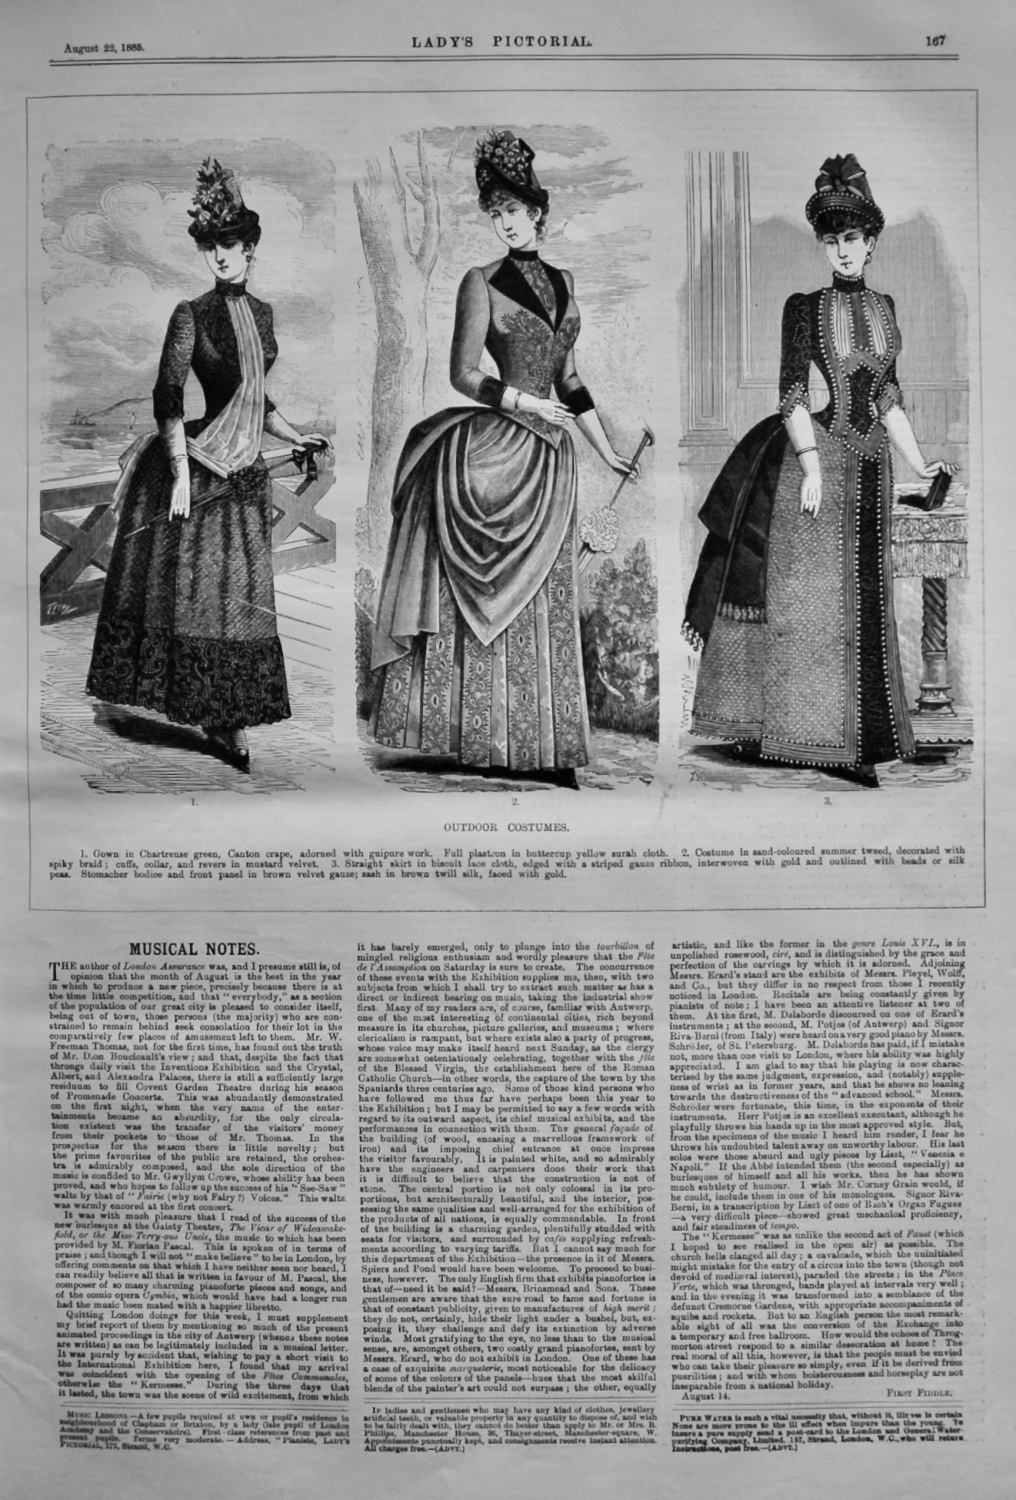 Outdoor Costumes.  1885.